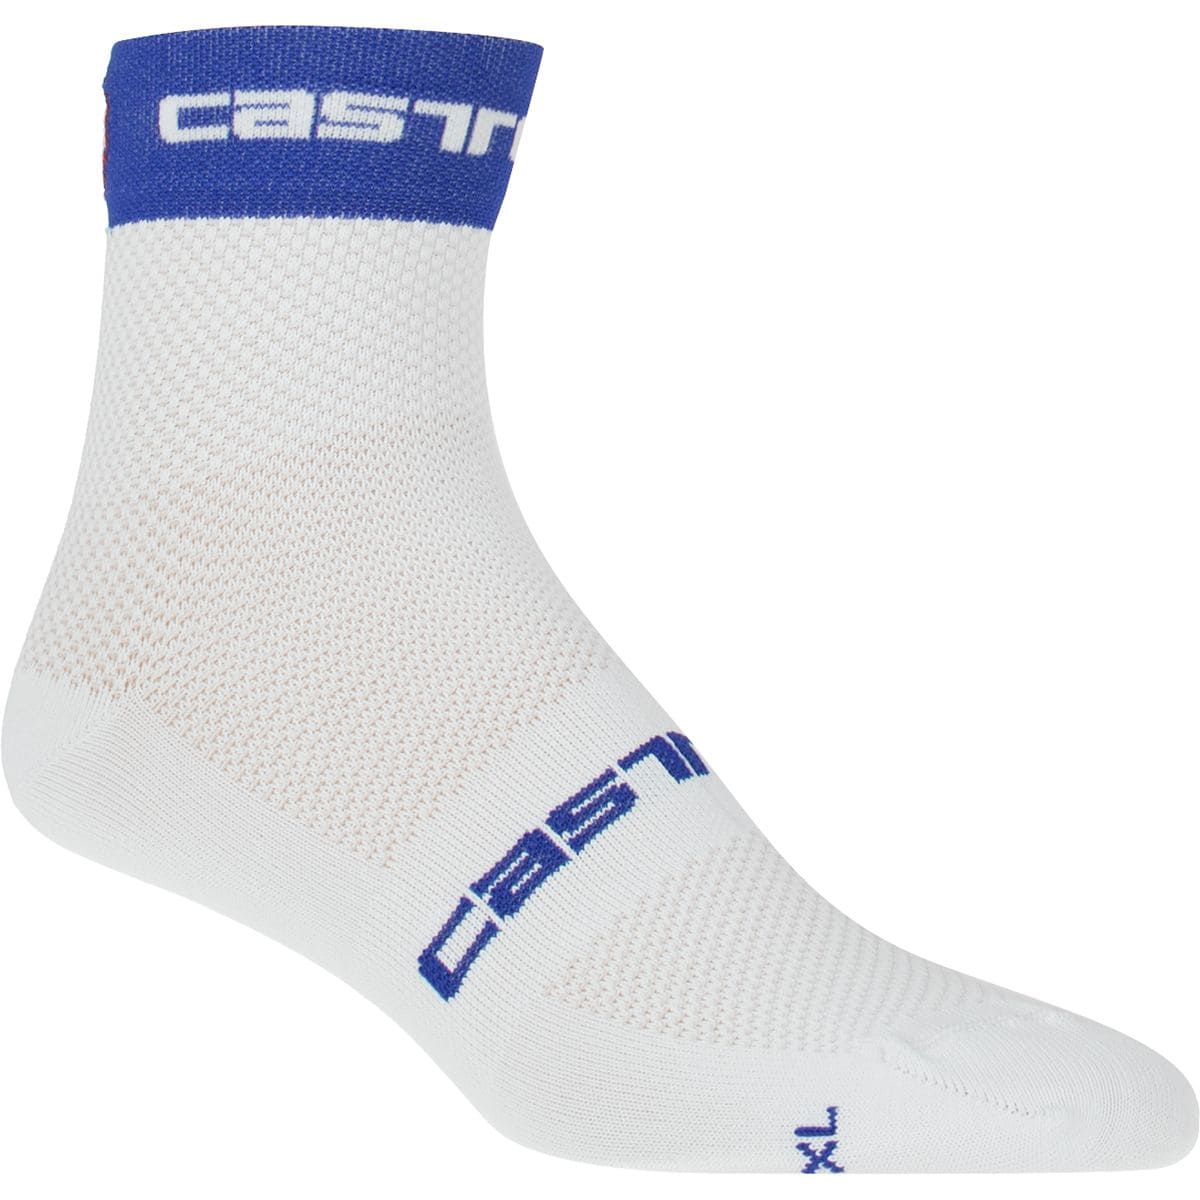 Castelli Free 6 Sock - Men's